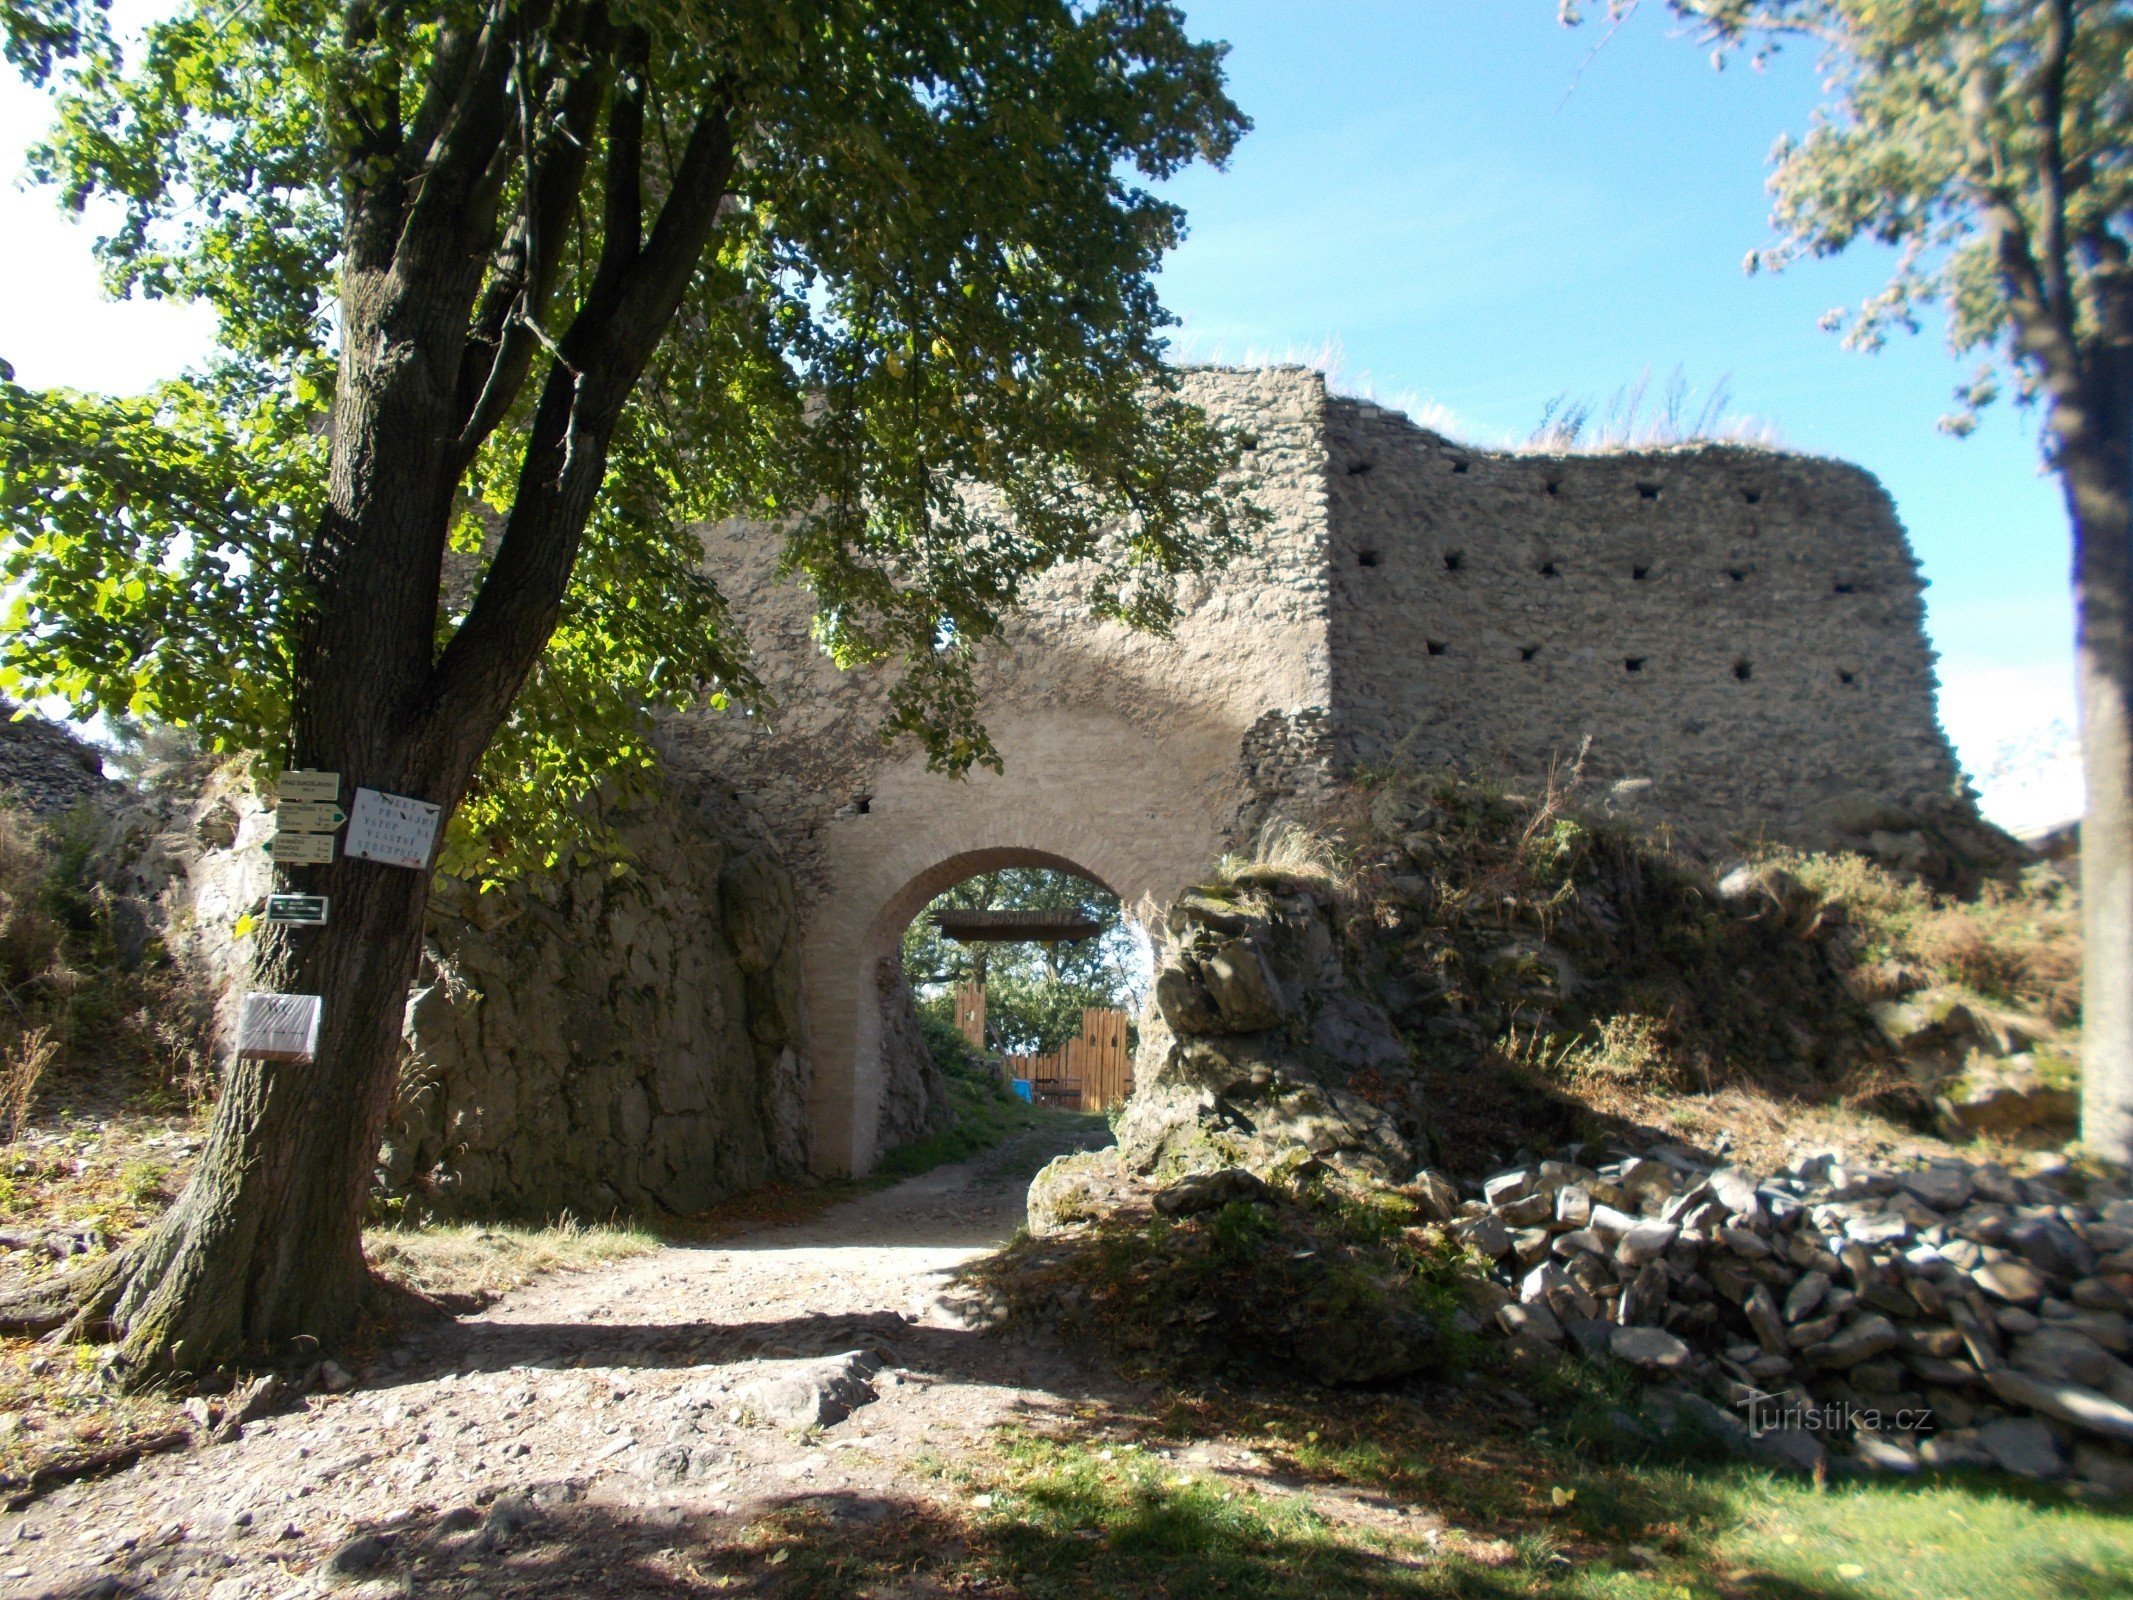 Poarta de intrare la Castelul Sukoslav (Kostomlaty).